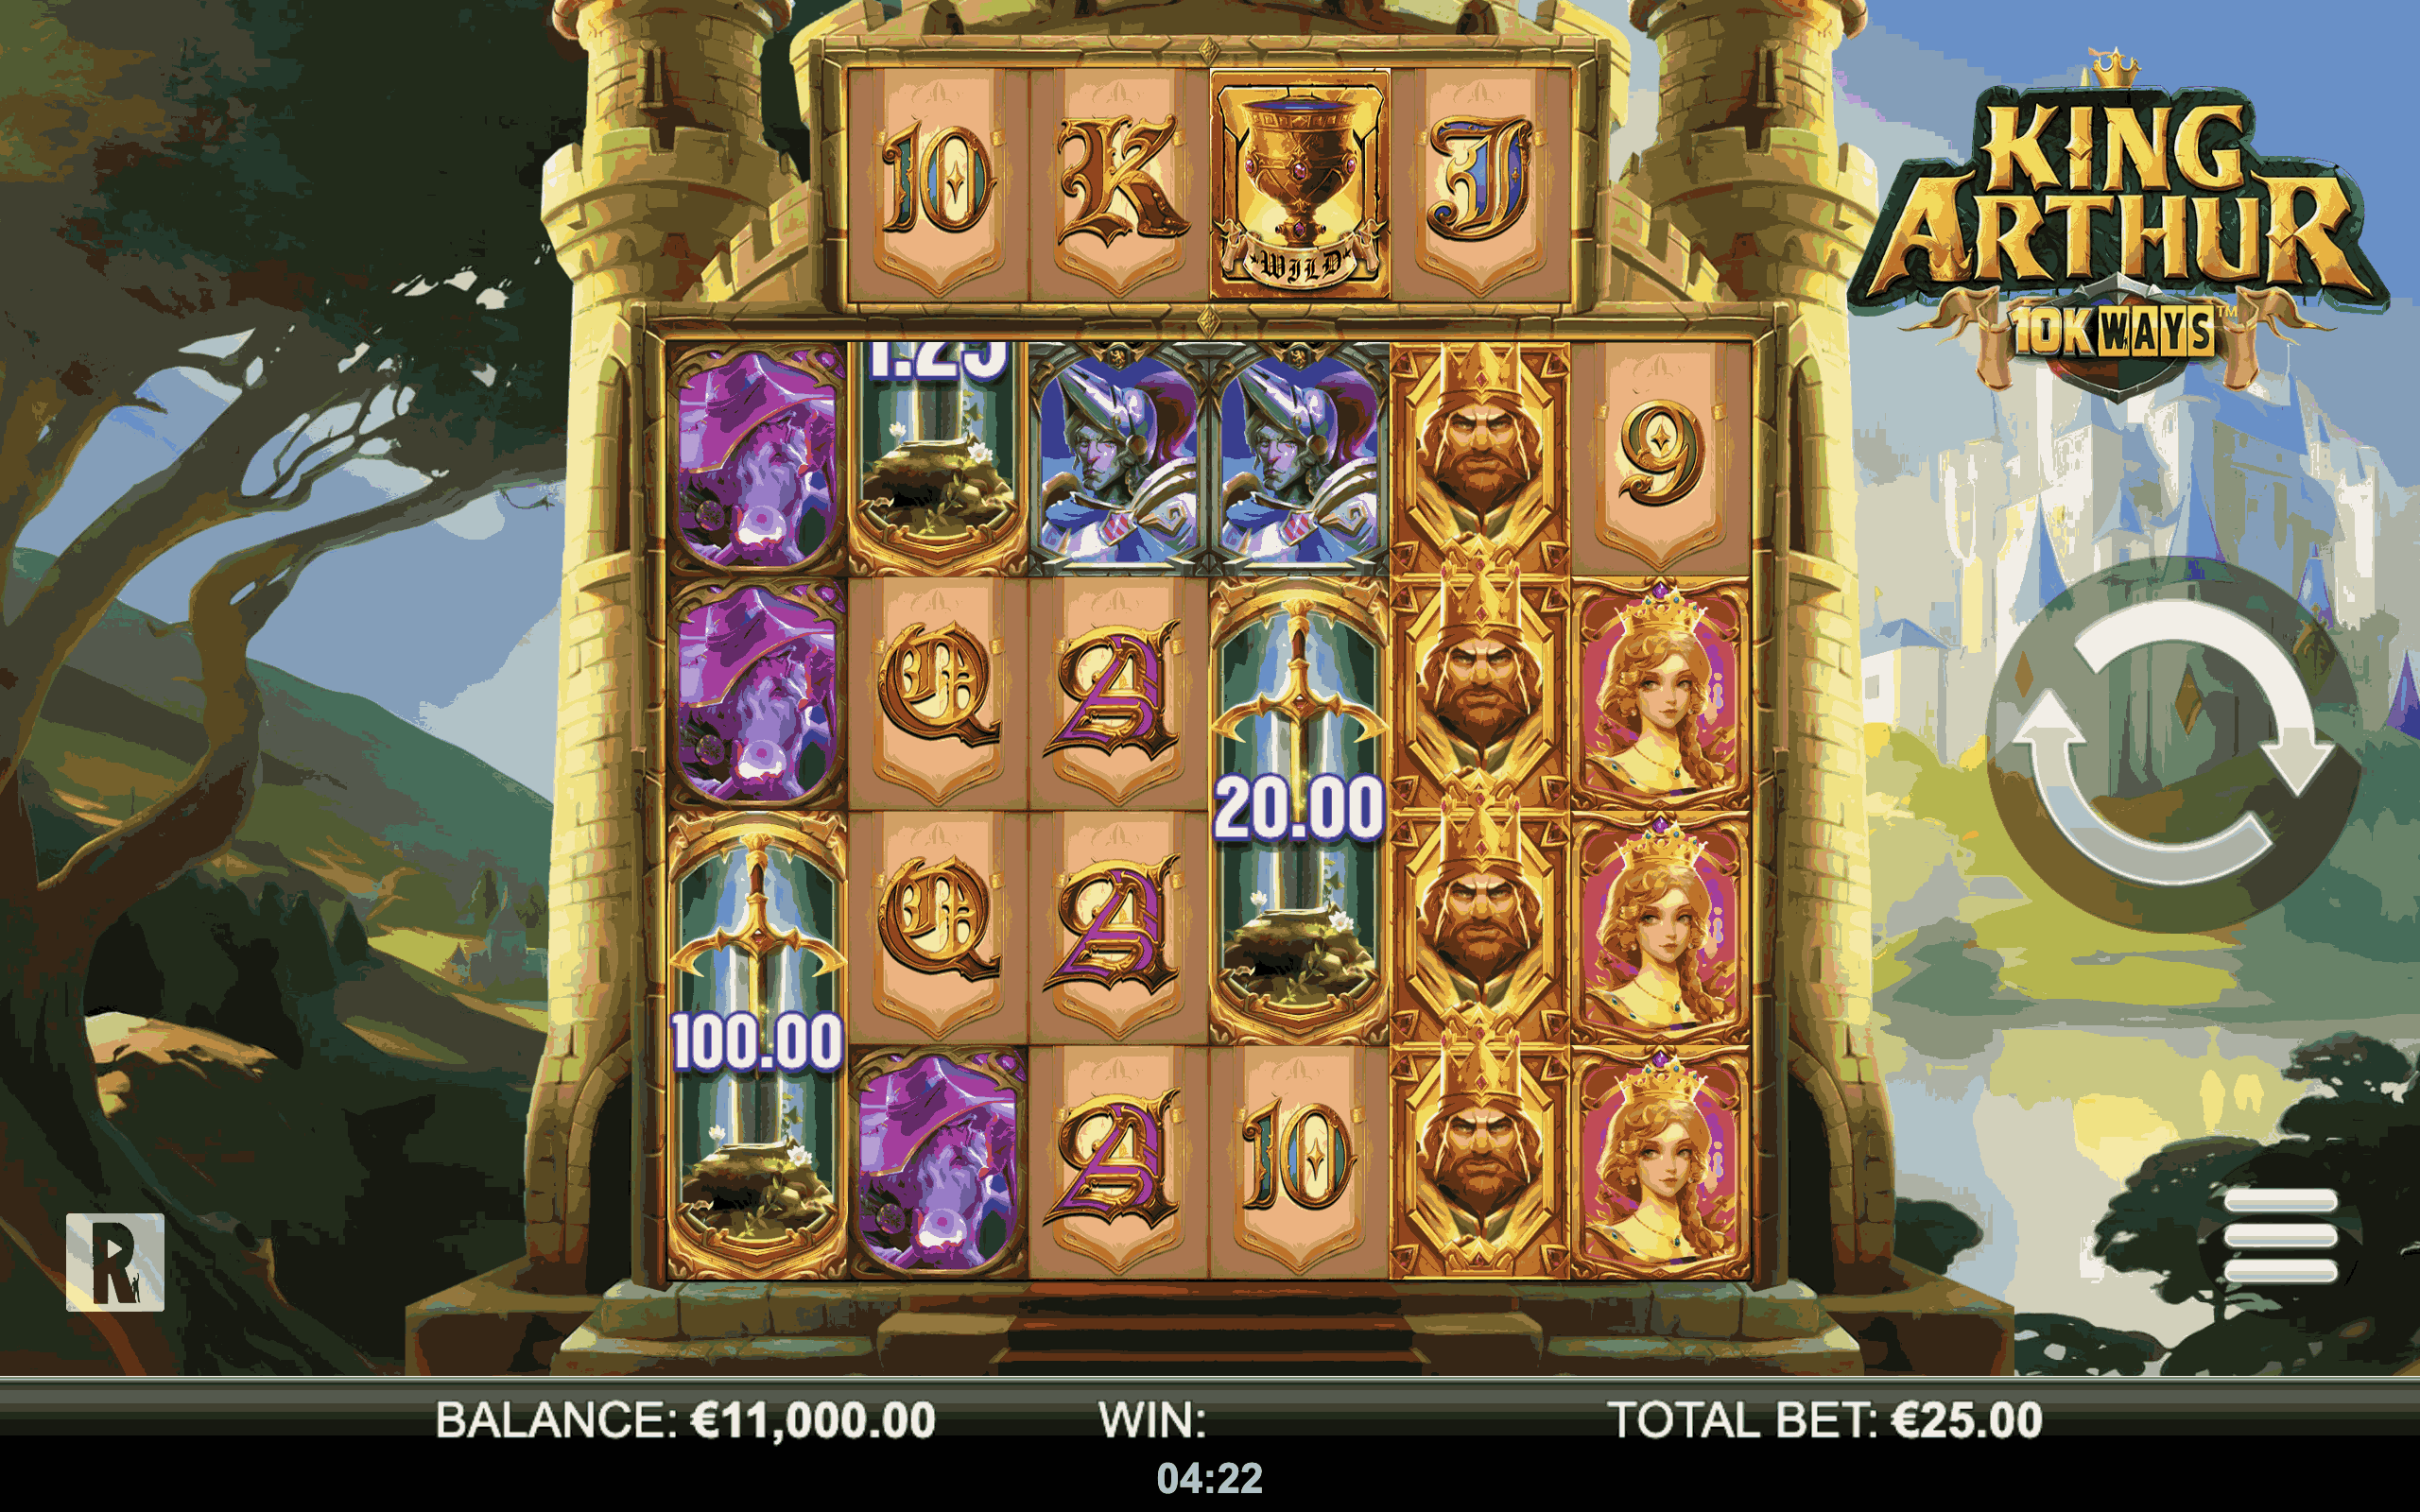 King Arthur 10K Ways Slot - 6